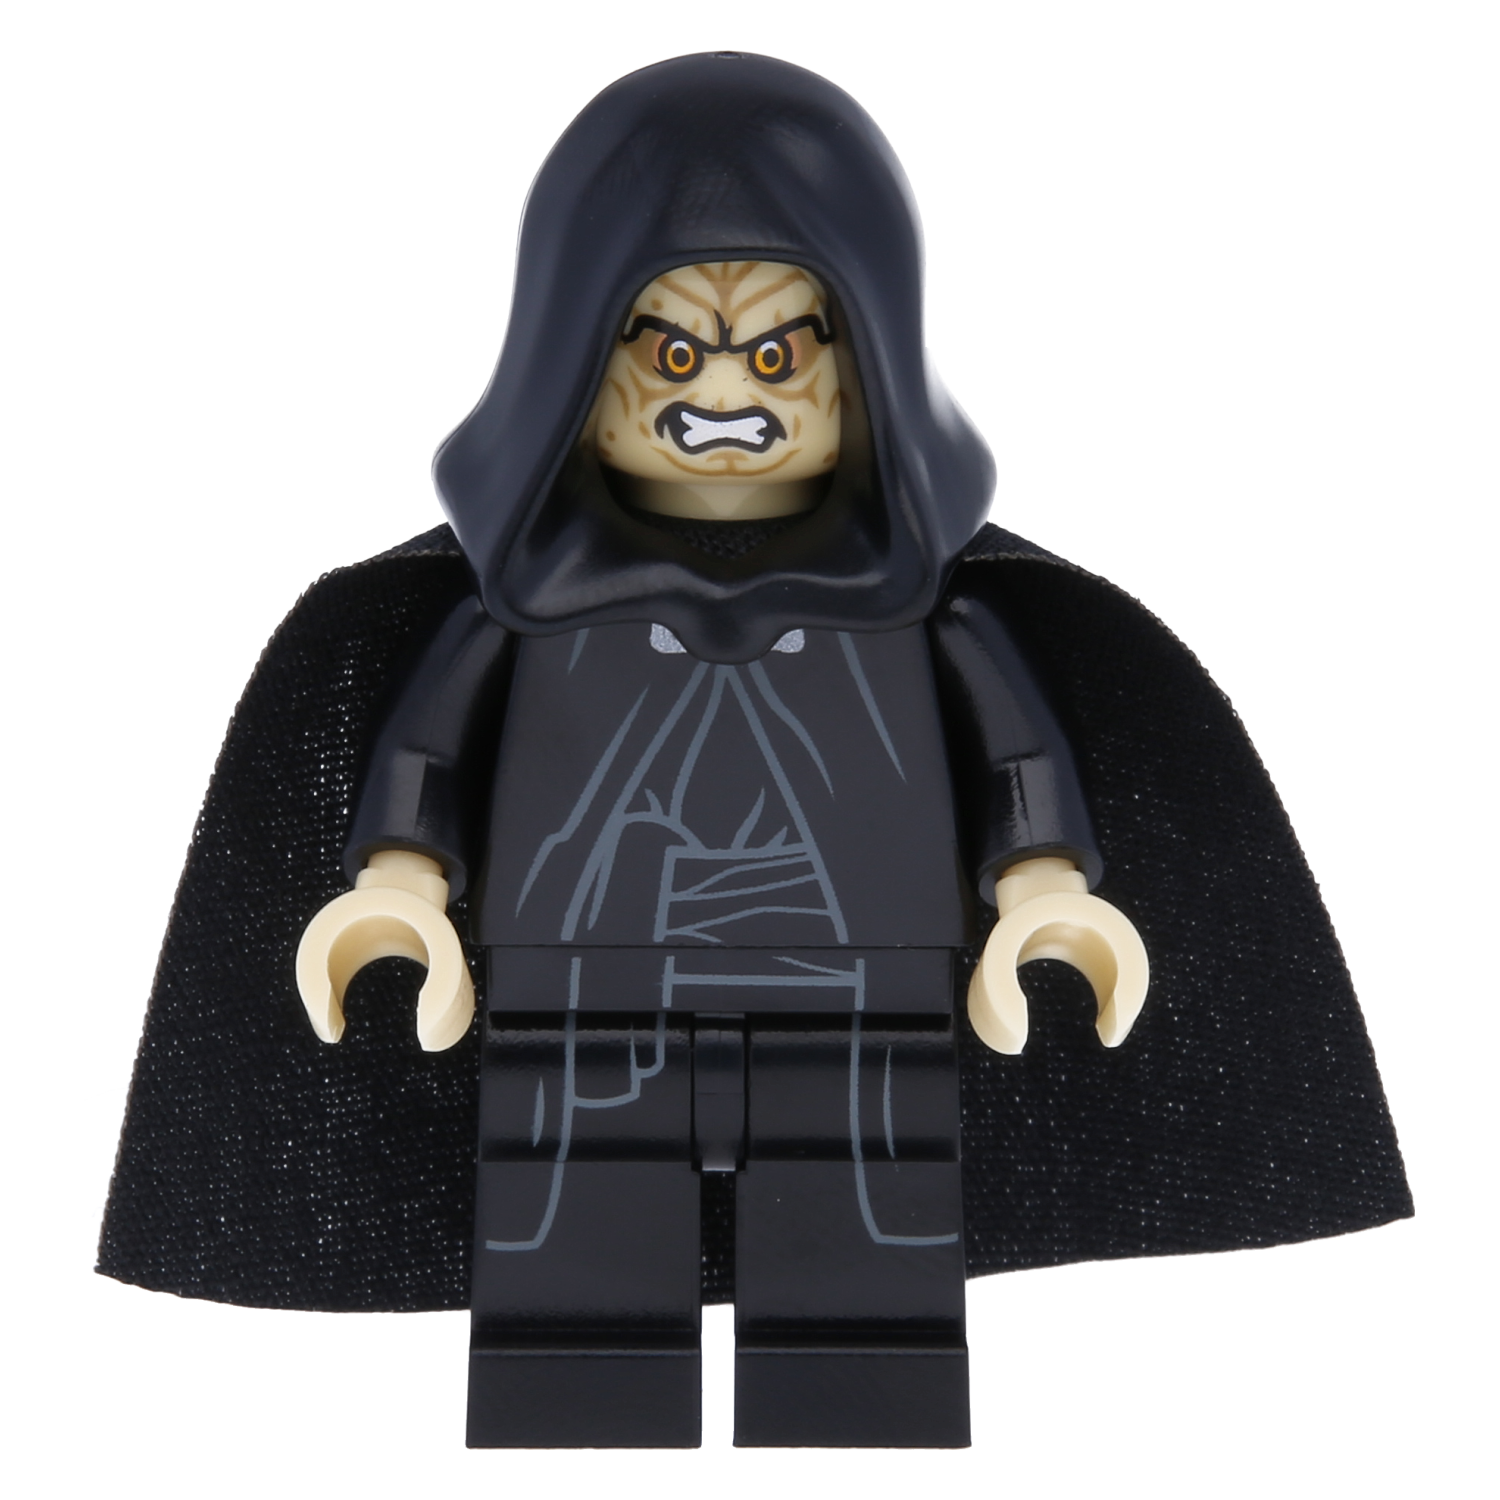 LEGO Star Wars Minifigure - Emperor Palpatine (Tan head and hands)